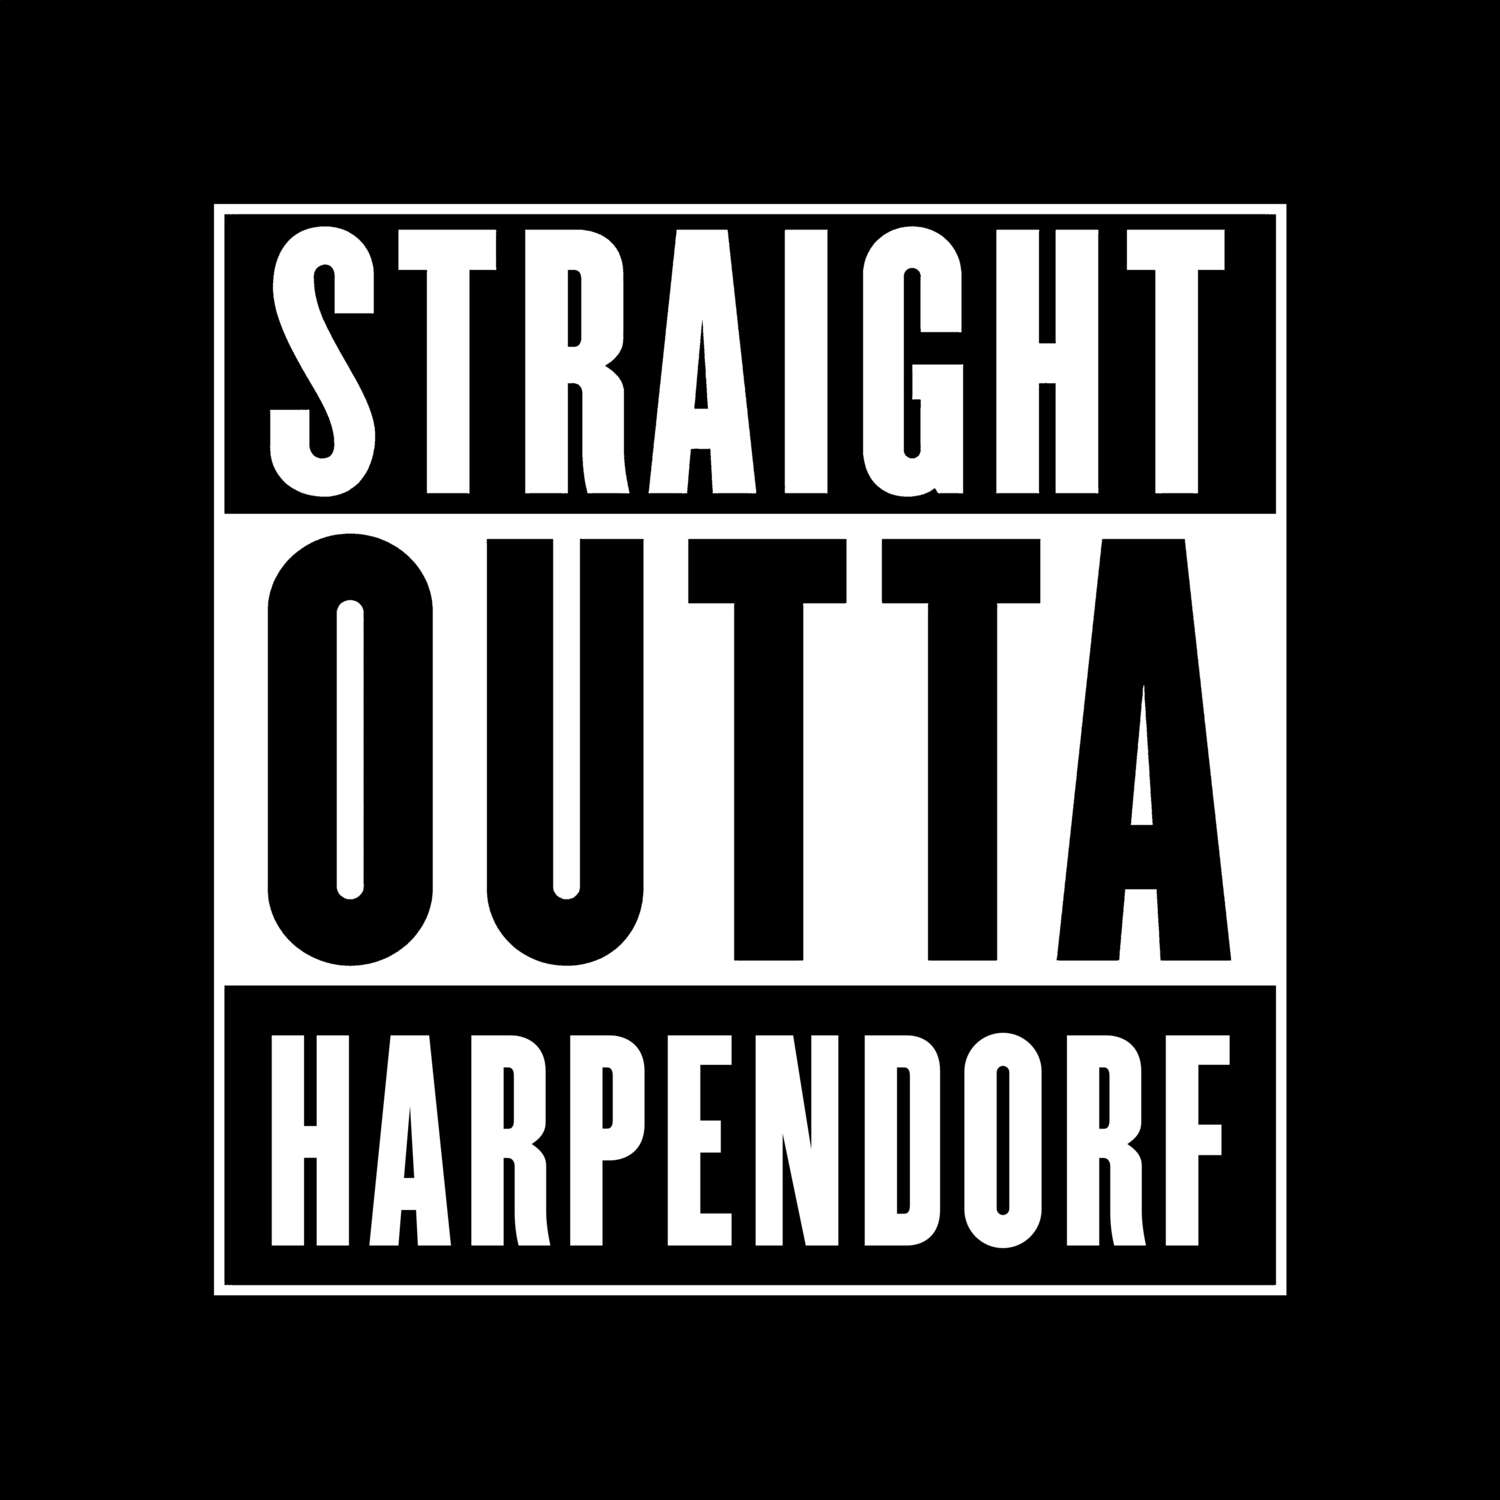 Harpendorf T-Shirt »Straight Outta«